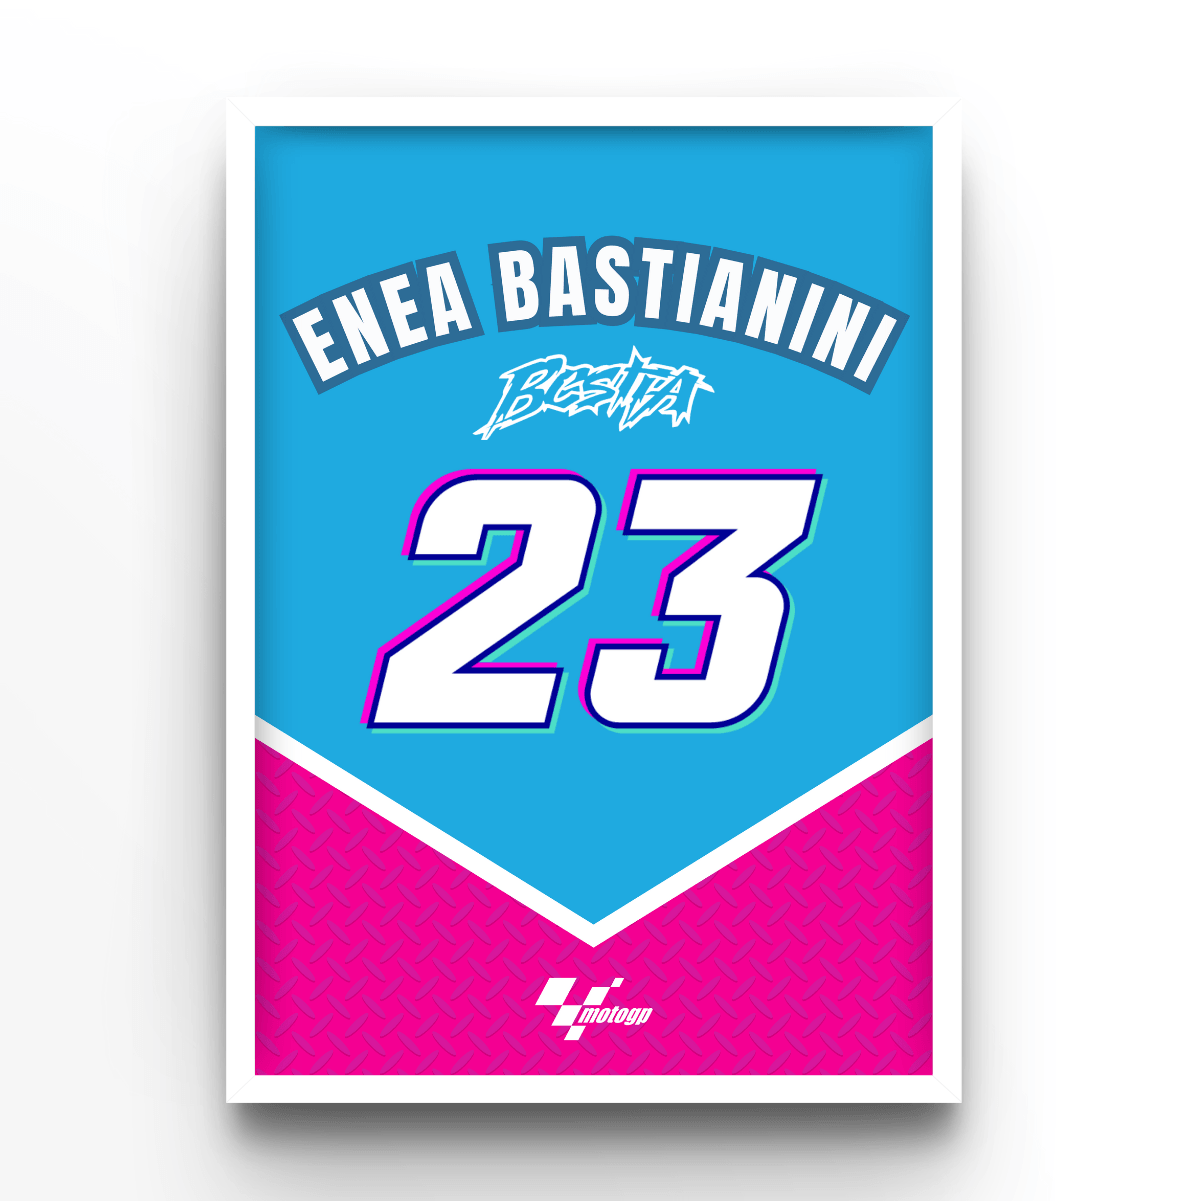 Enea Bastianini - A4, A3, A2 Posters Base - Poster Print Shop / Art Prints / PostersBase